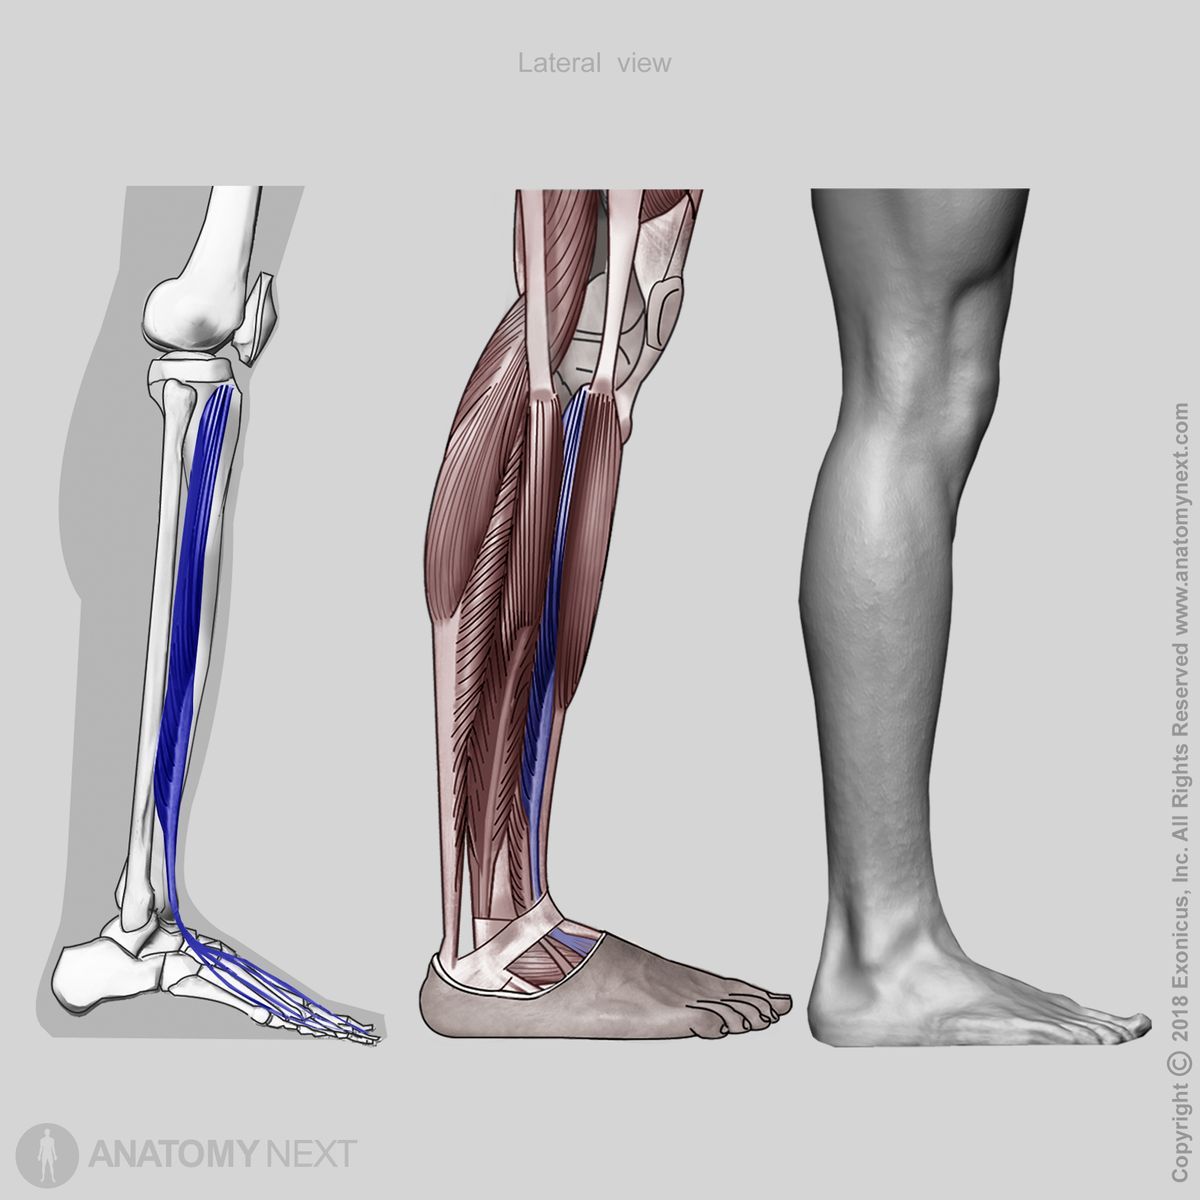 Extensor digitorum longus, Origin of extensor digitorum longus, Insertion of extensor digitorum longus, Anterior compartment of leg, Leg extensors, Leg muscles, Anterior compartment muscles, Human leg